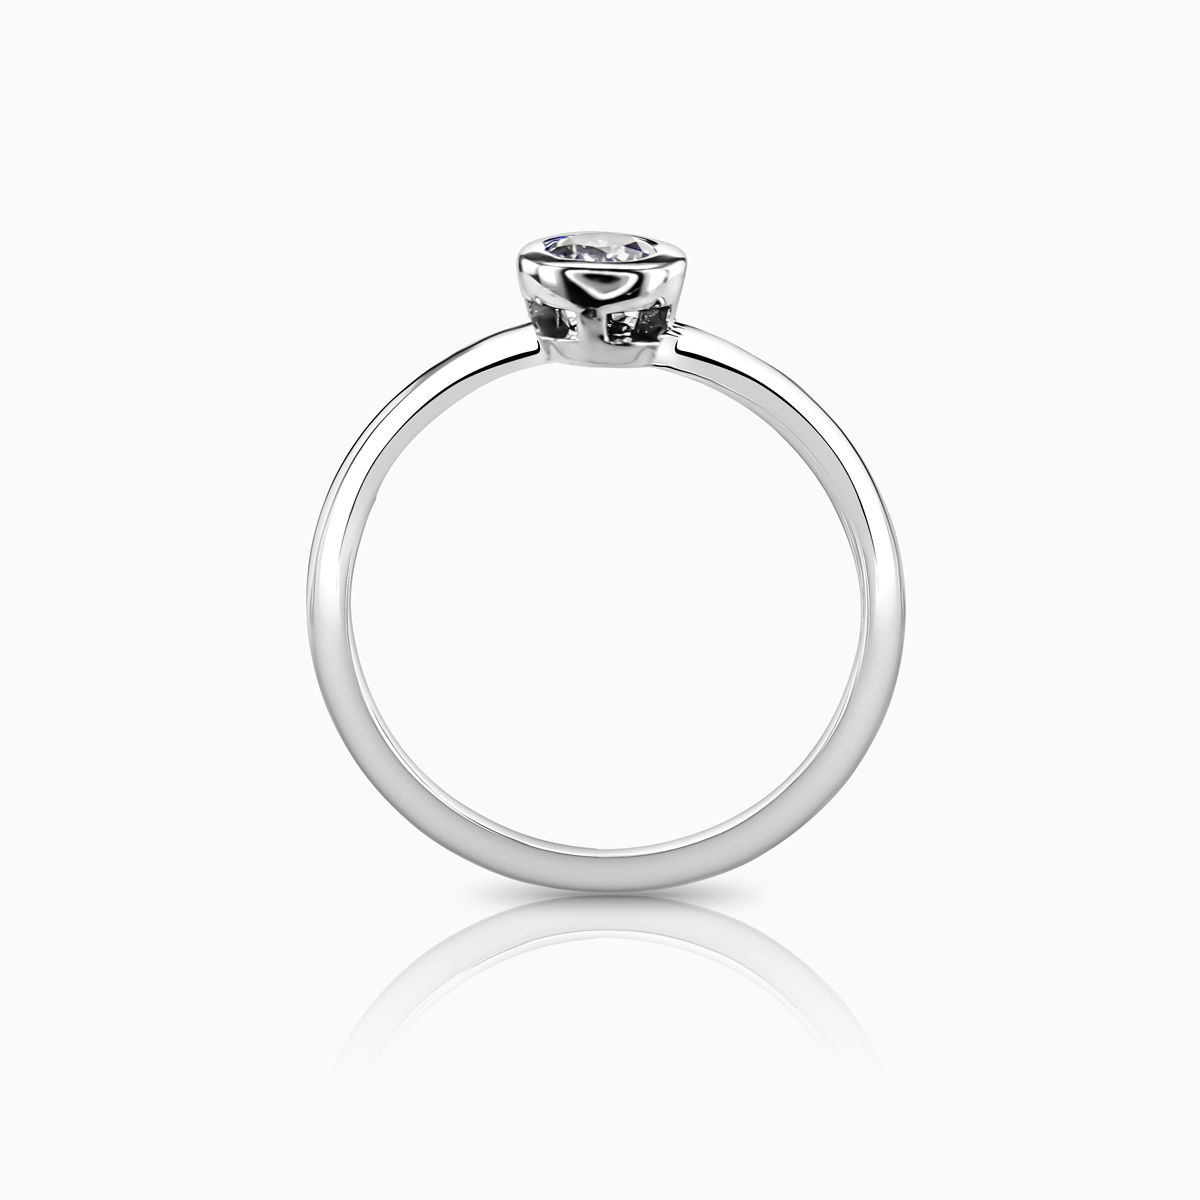 Vintage Bezel-set 0.25carat Diamond Solitaire Engagement Ring, 14k White Gold